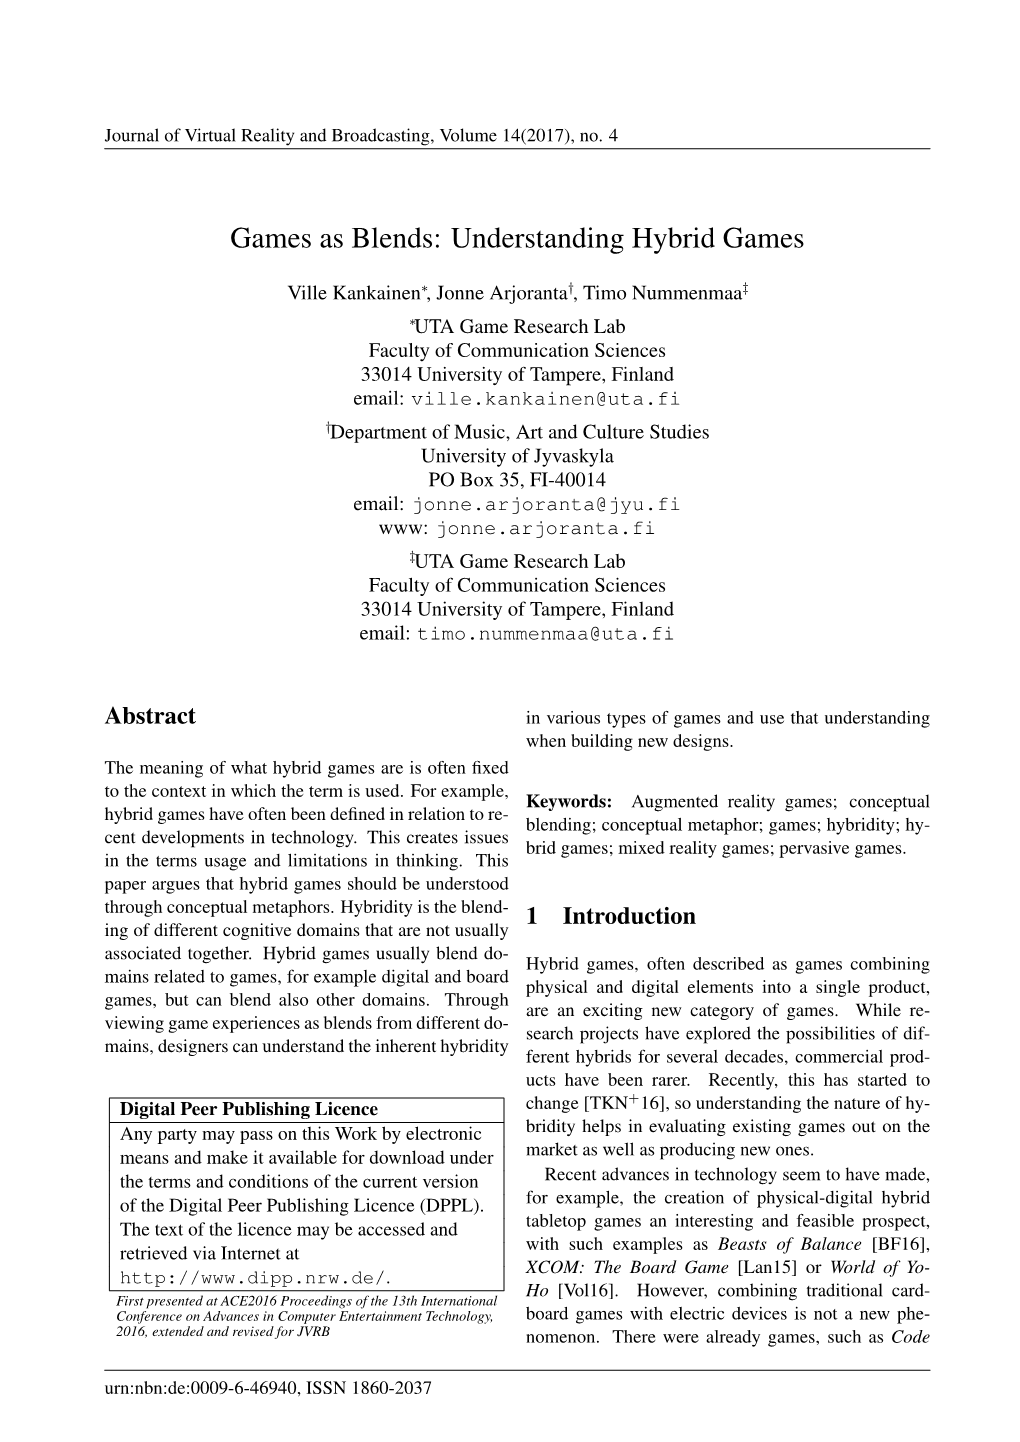 Understanding Hybrid Games